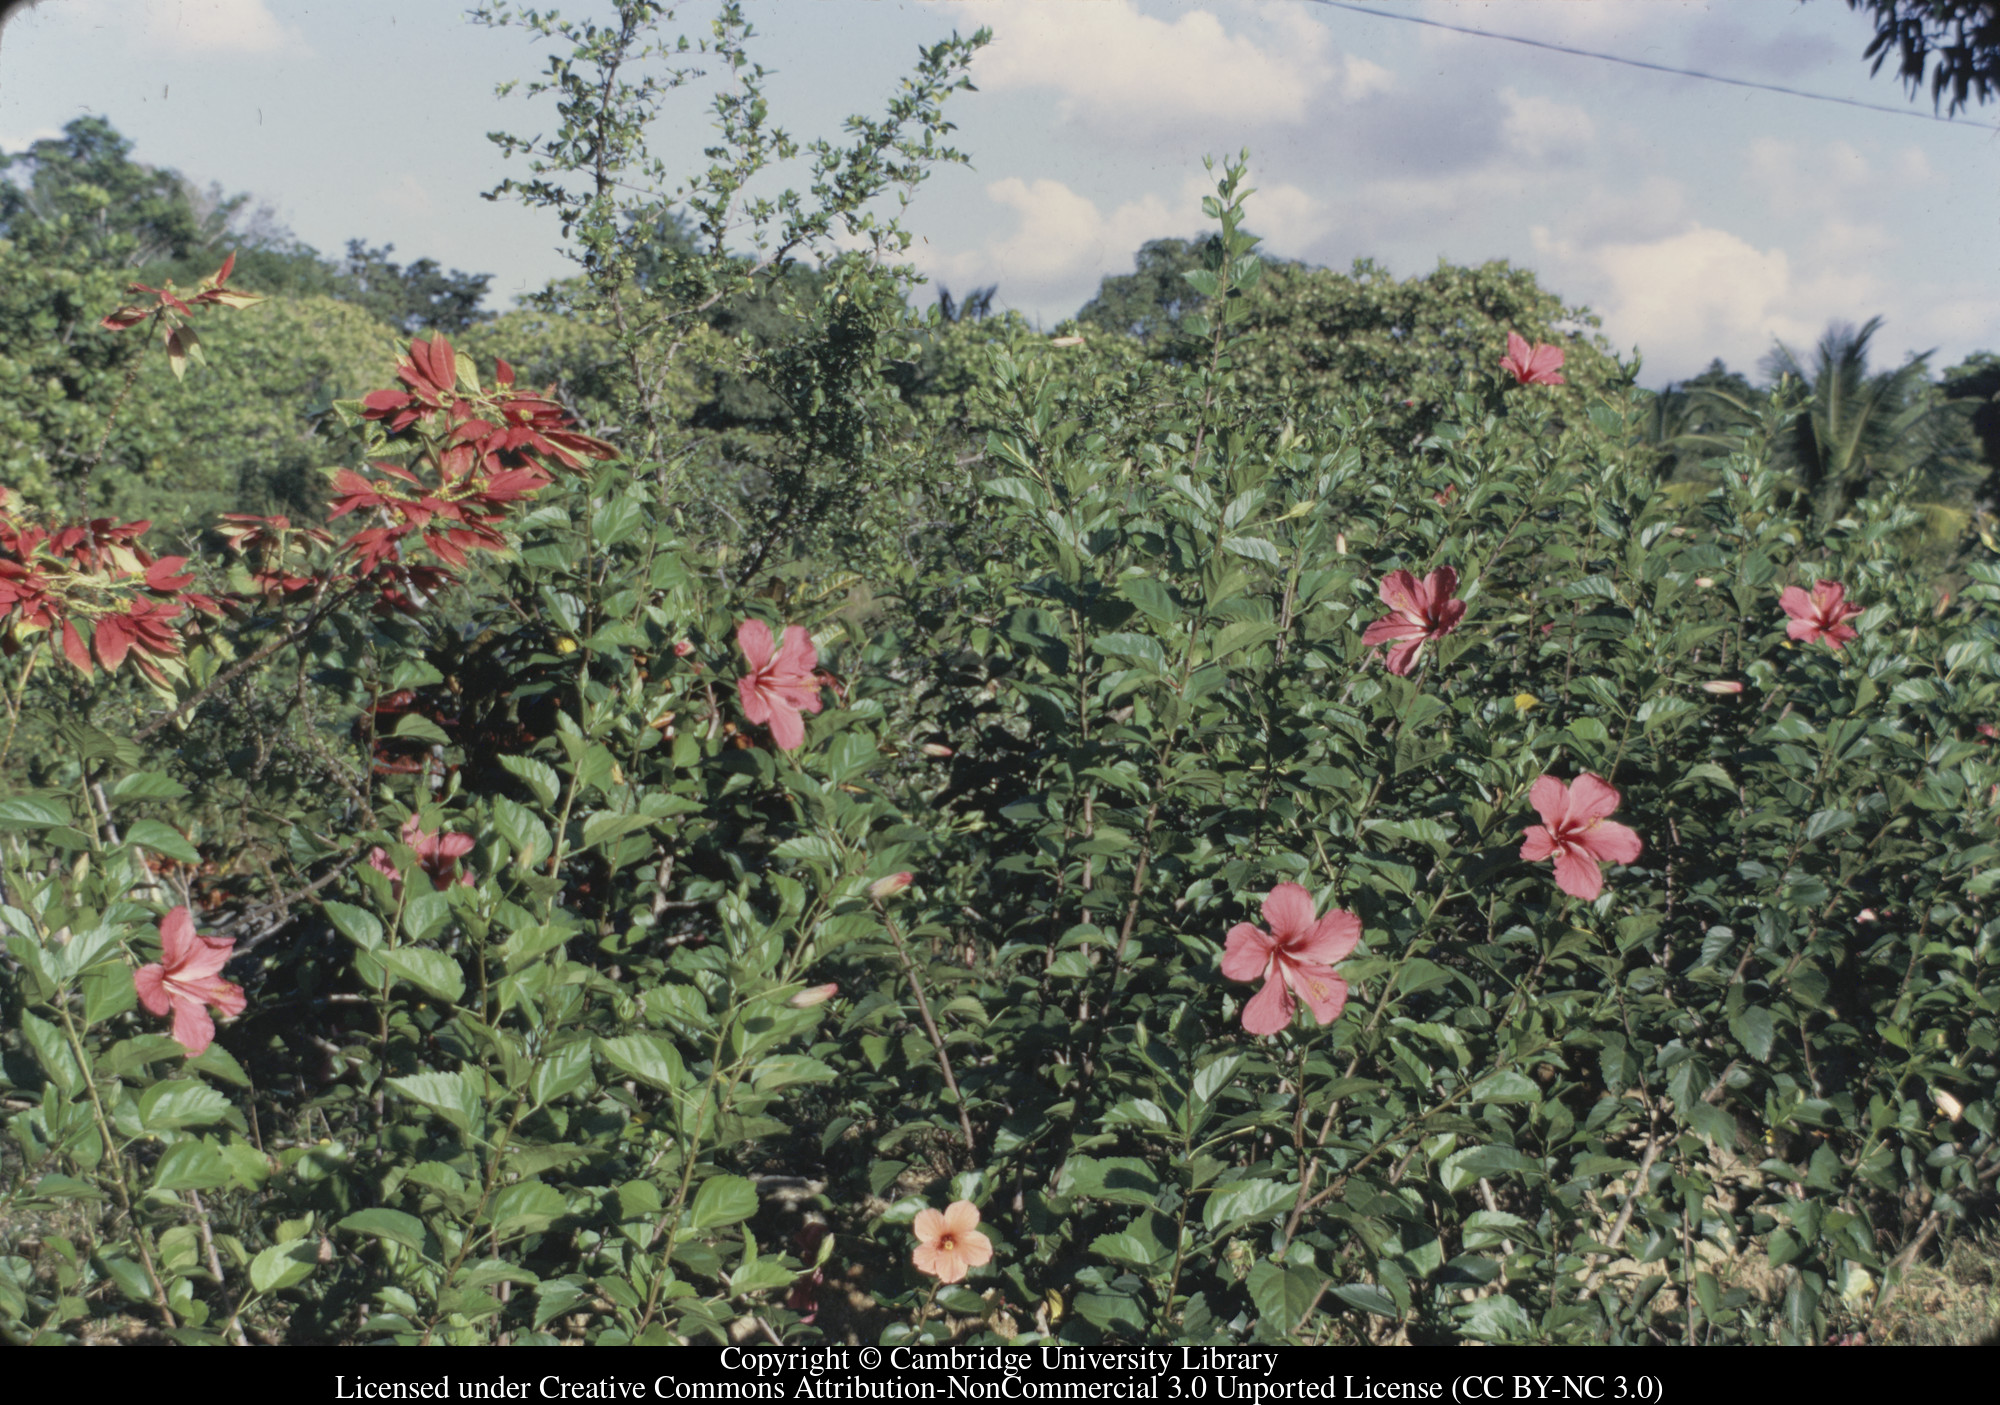 C [Ciceron] : hibiscus hedge, 1971-02